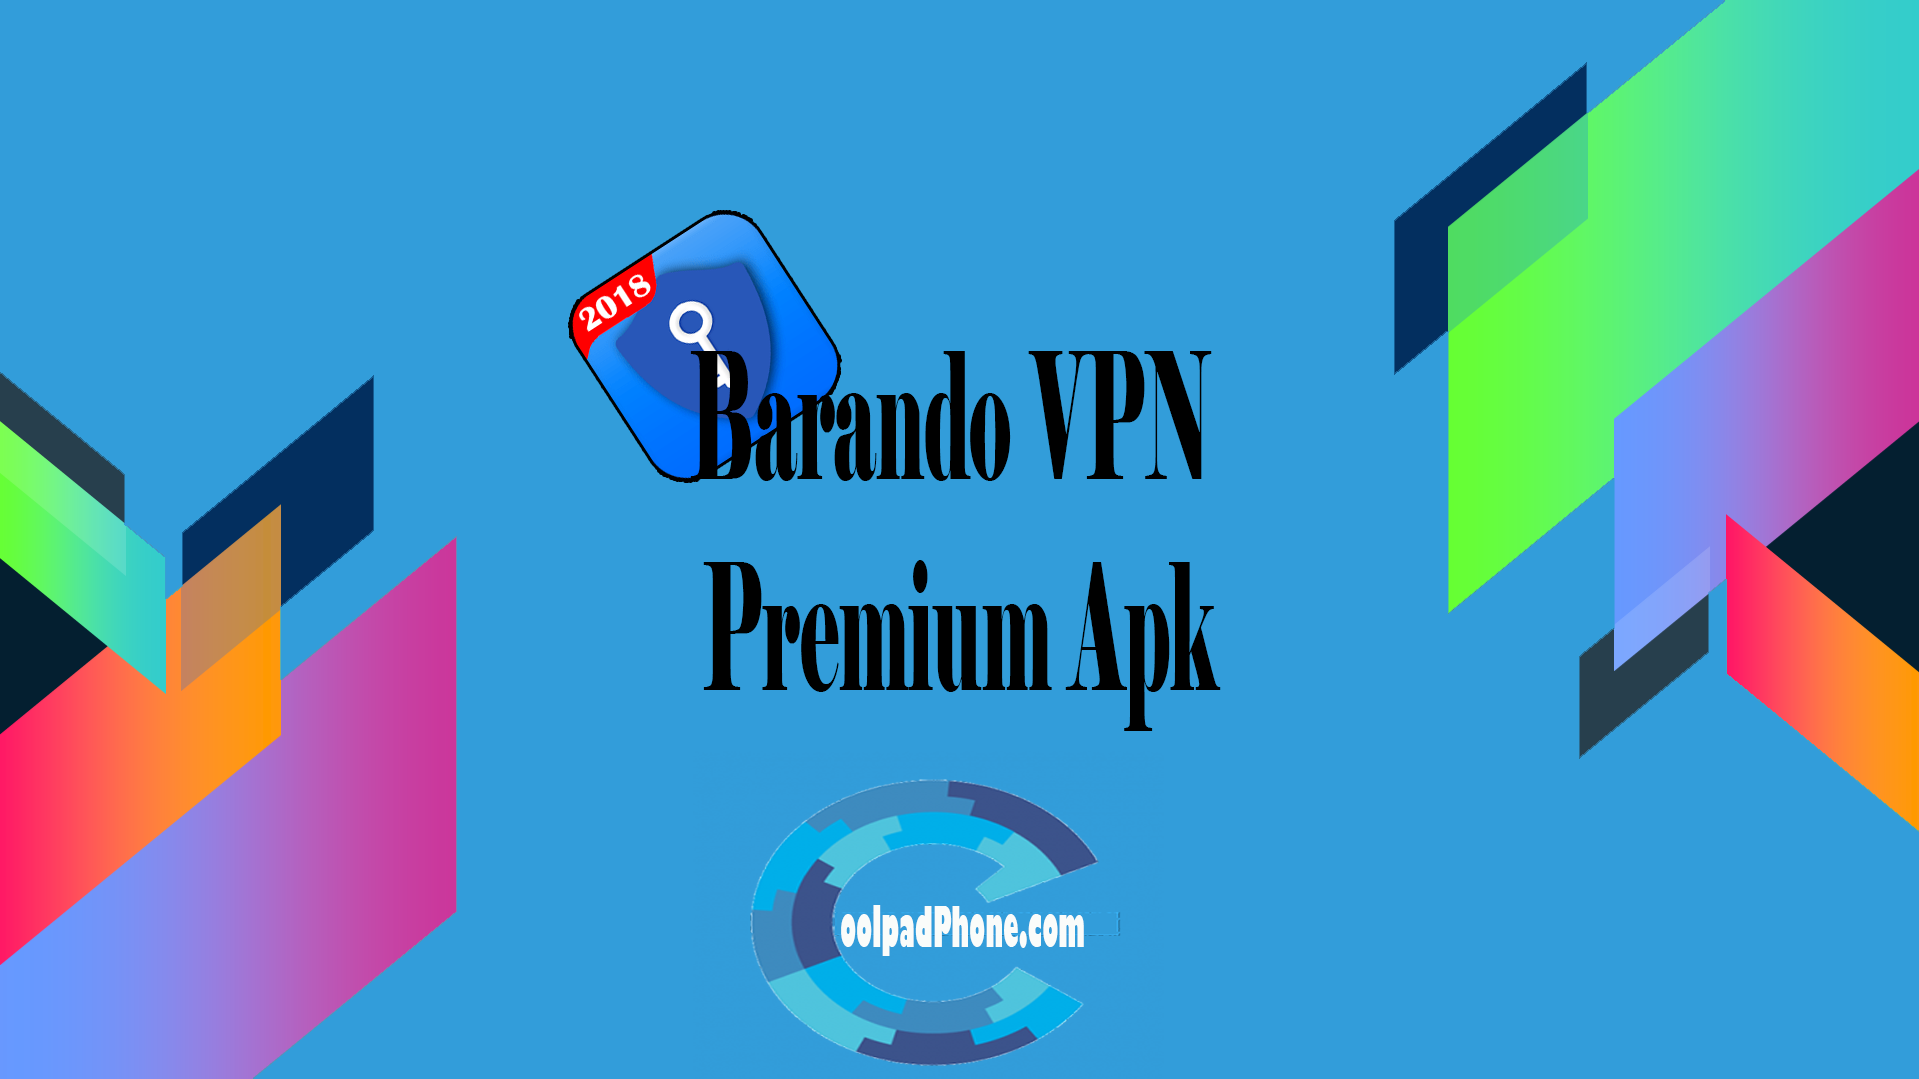 Barando VPN Premium Apk